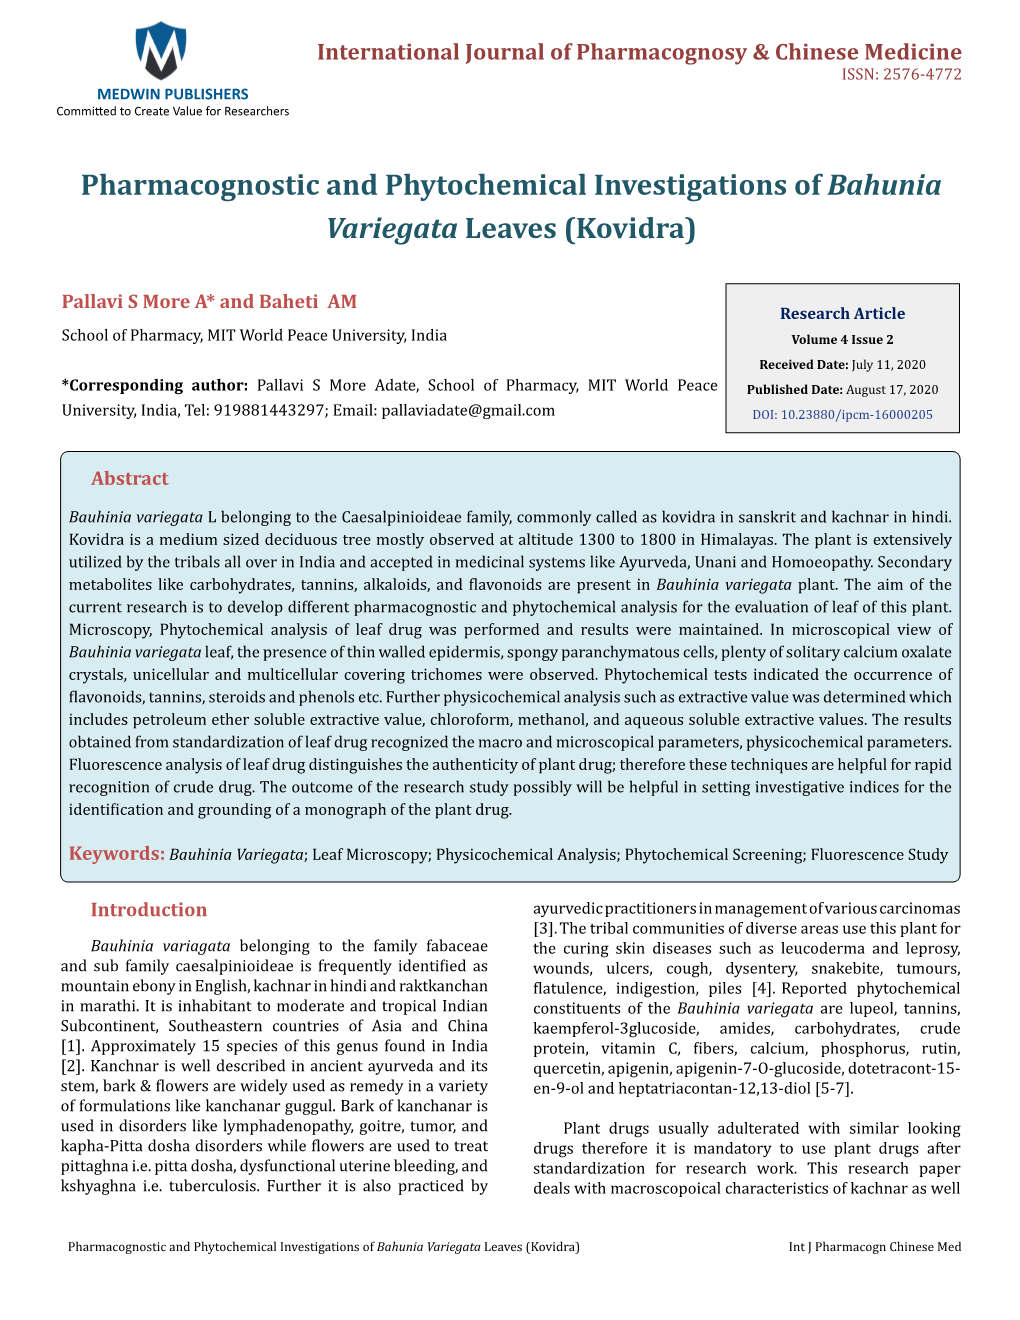 Pharmacognostic and Phytochemical Investigations of Bahunia Variegata Leaves (Kovidra)